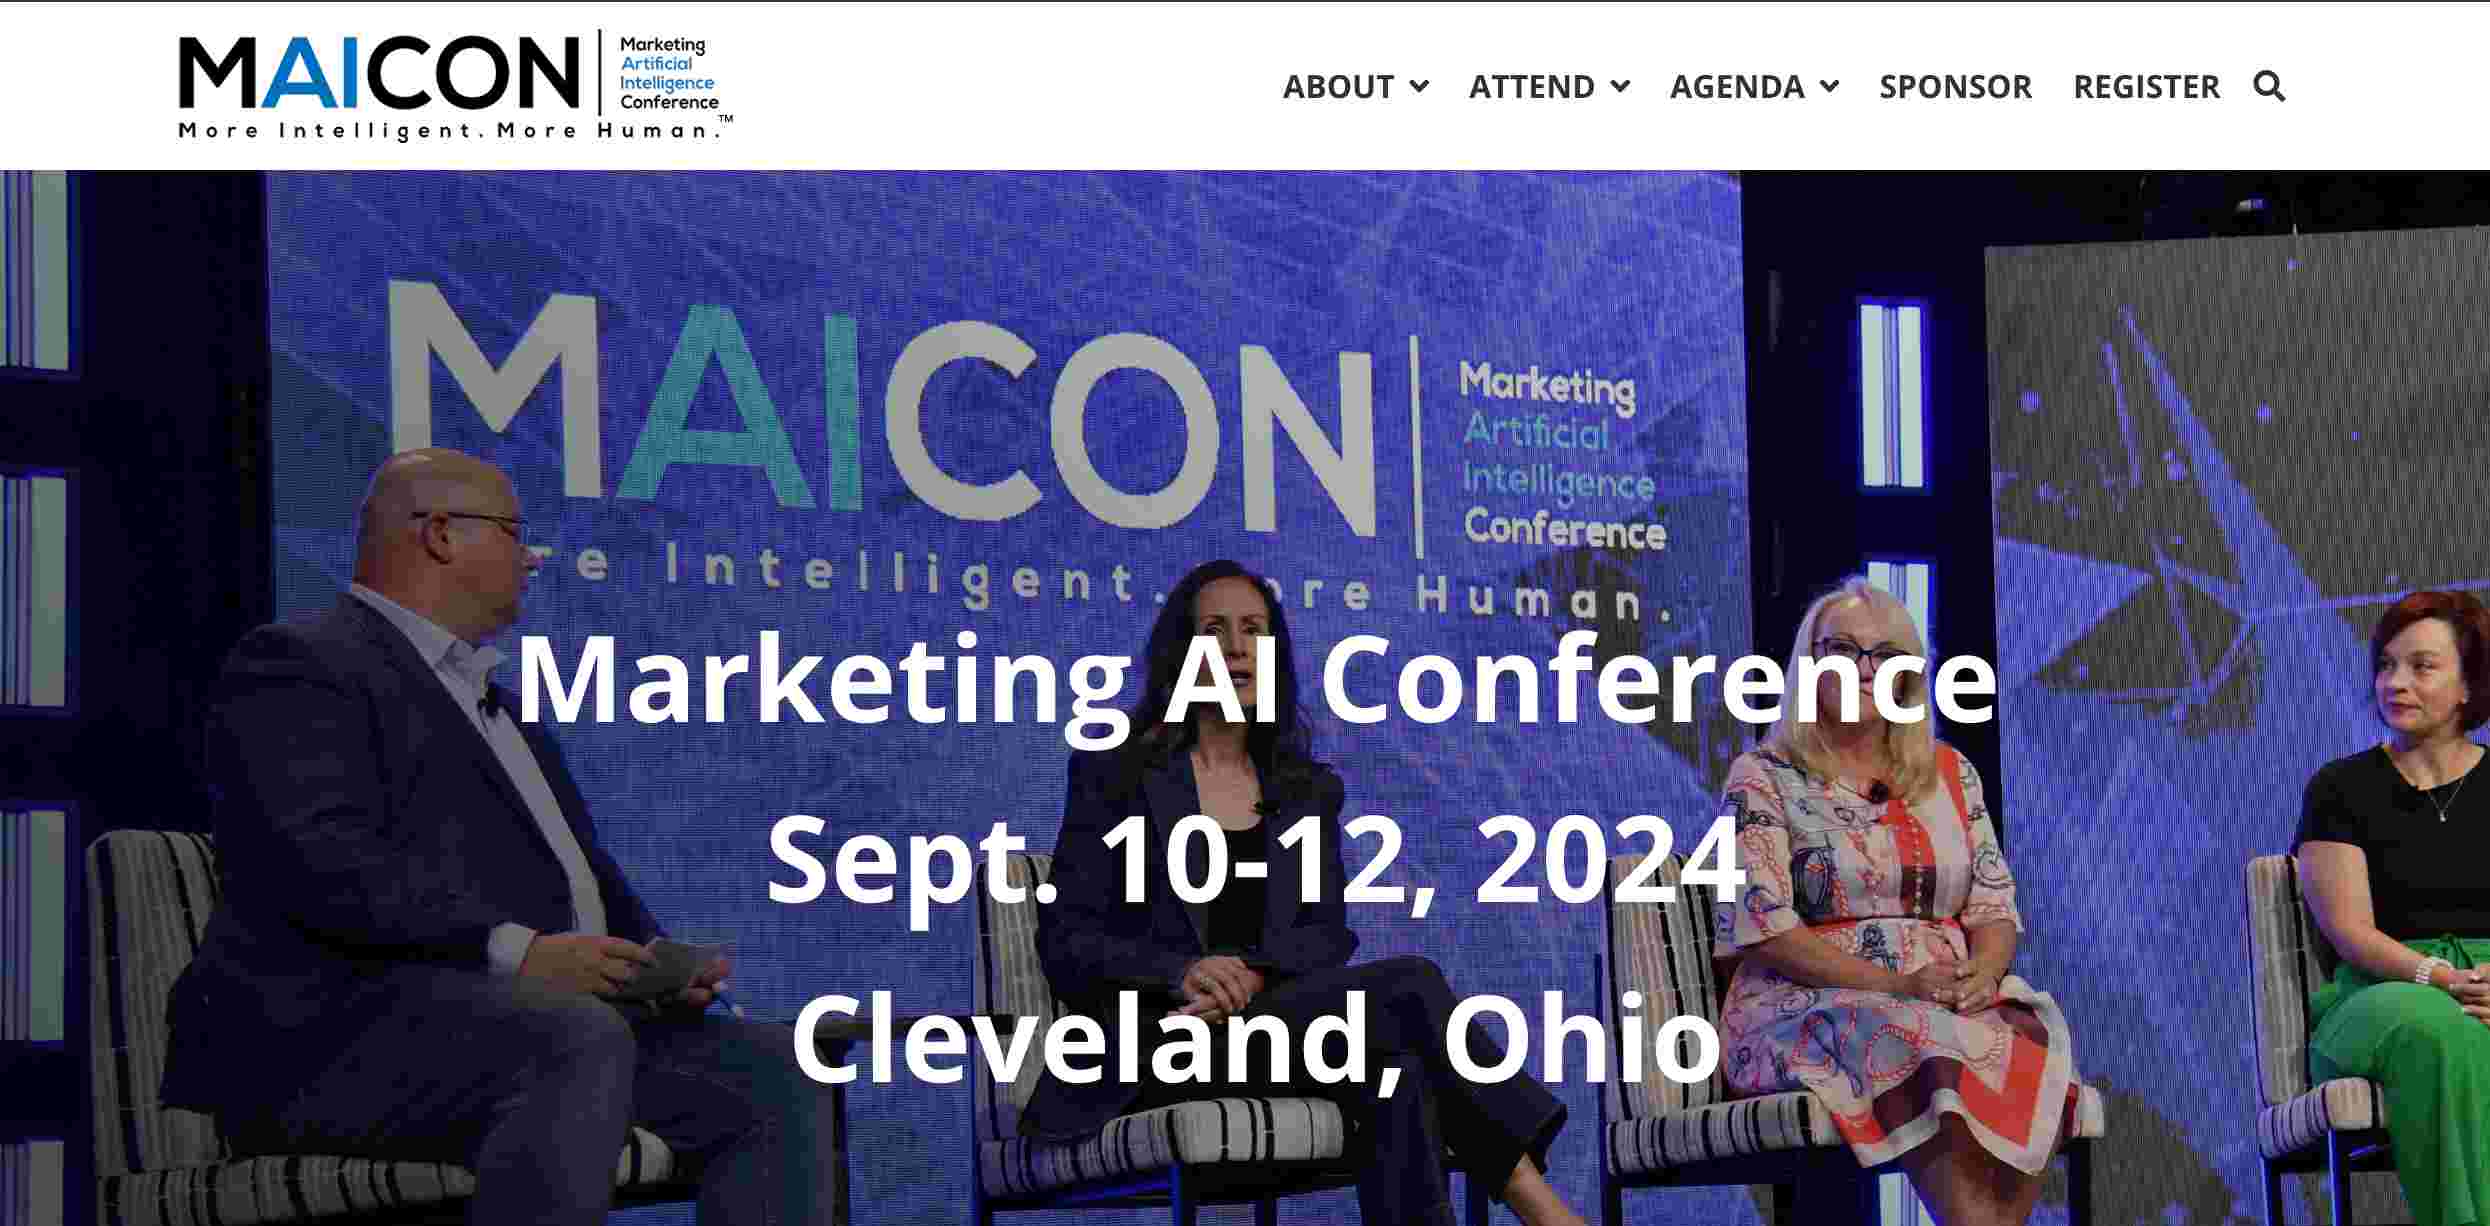 Digital marketing conference: MAICON 24